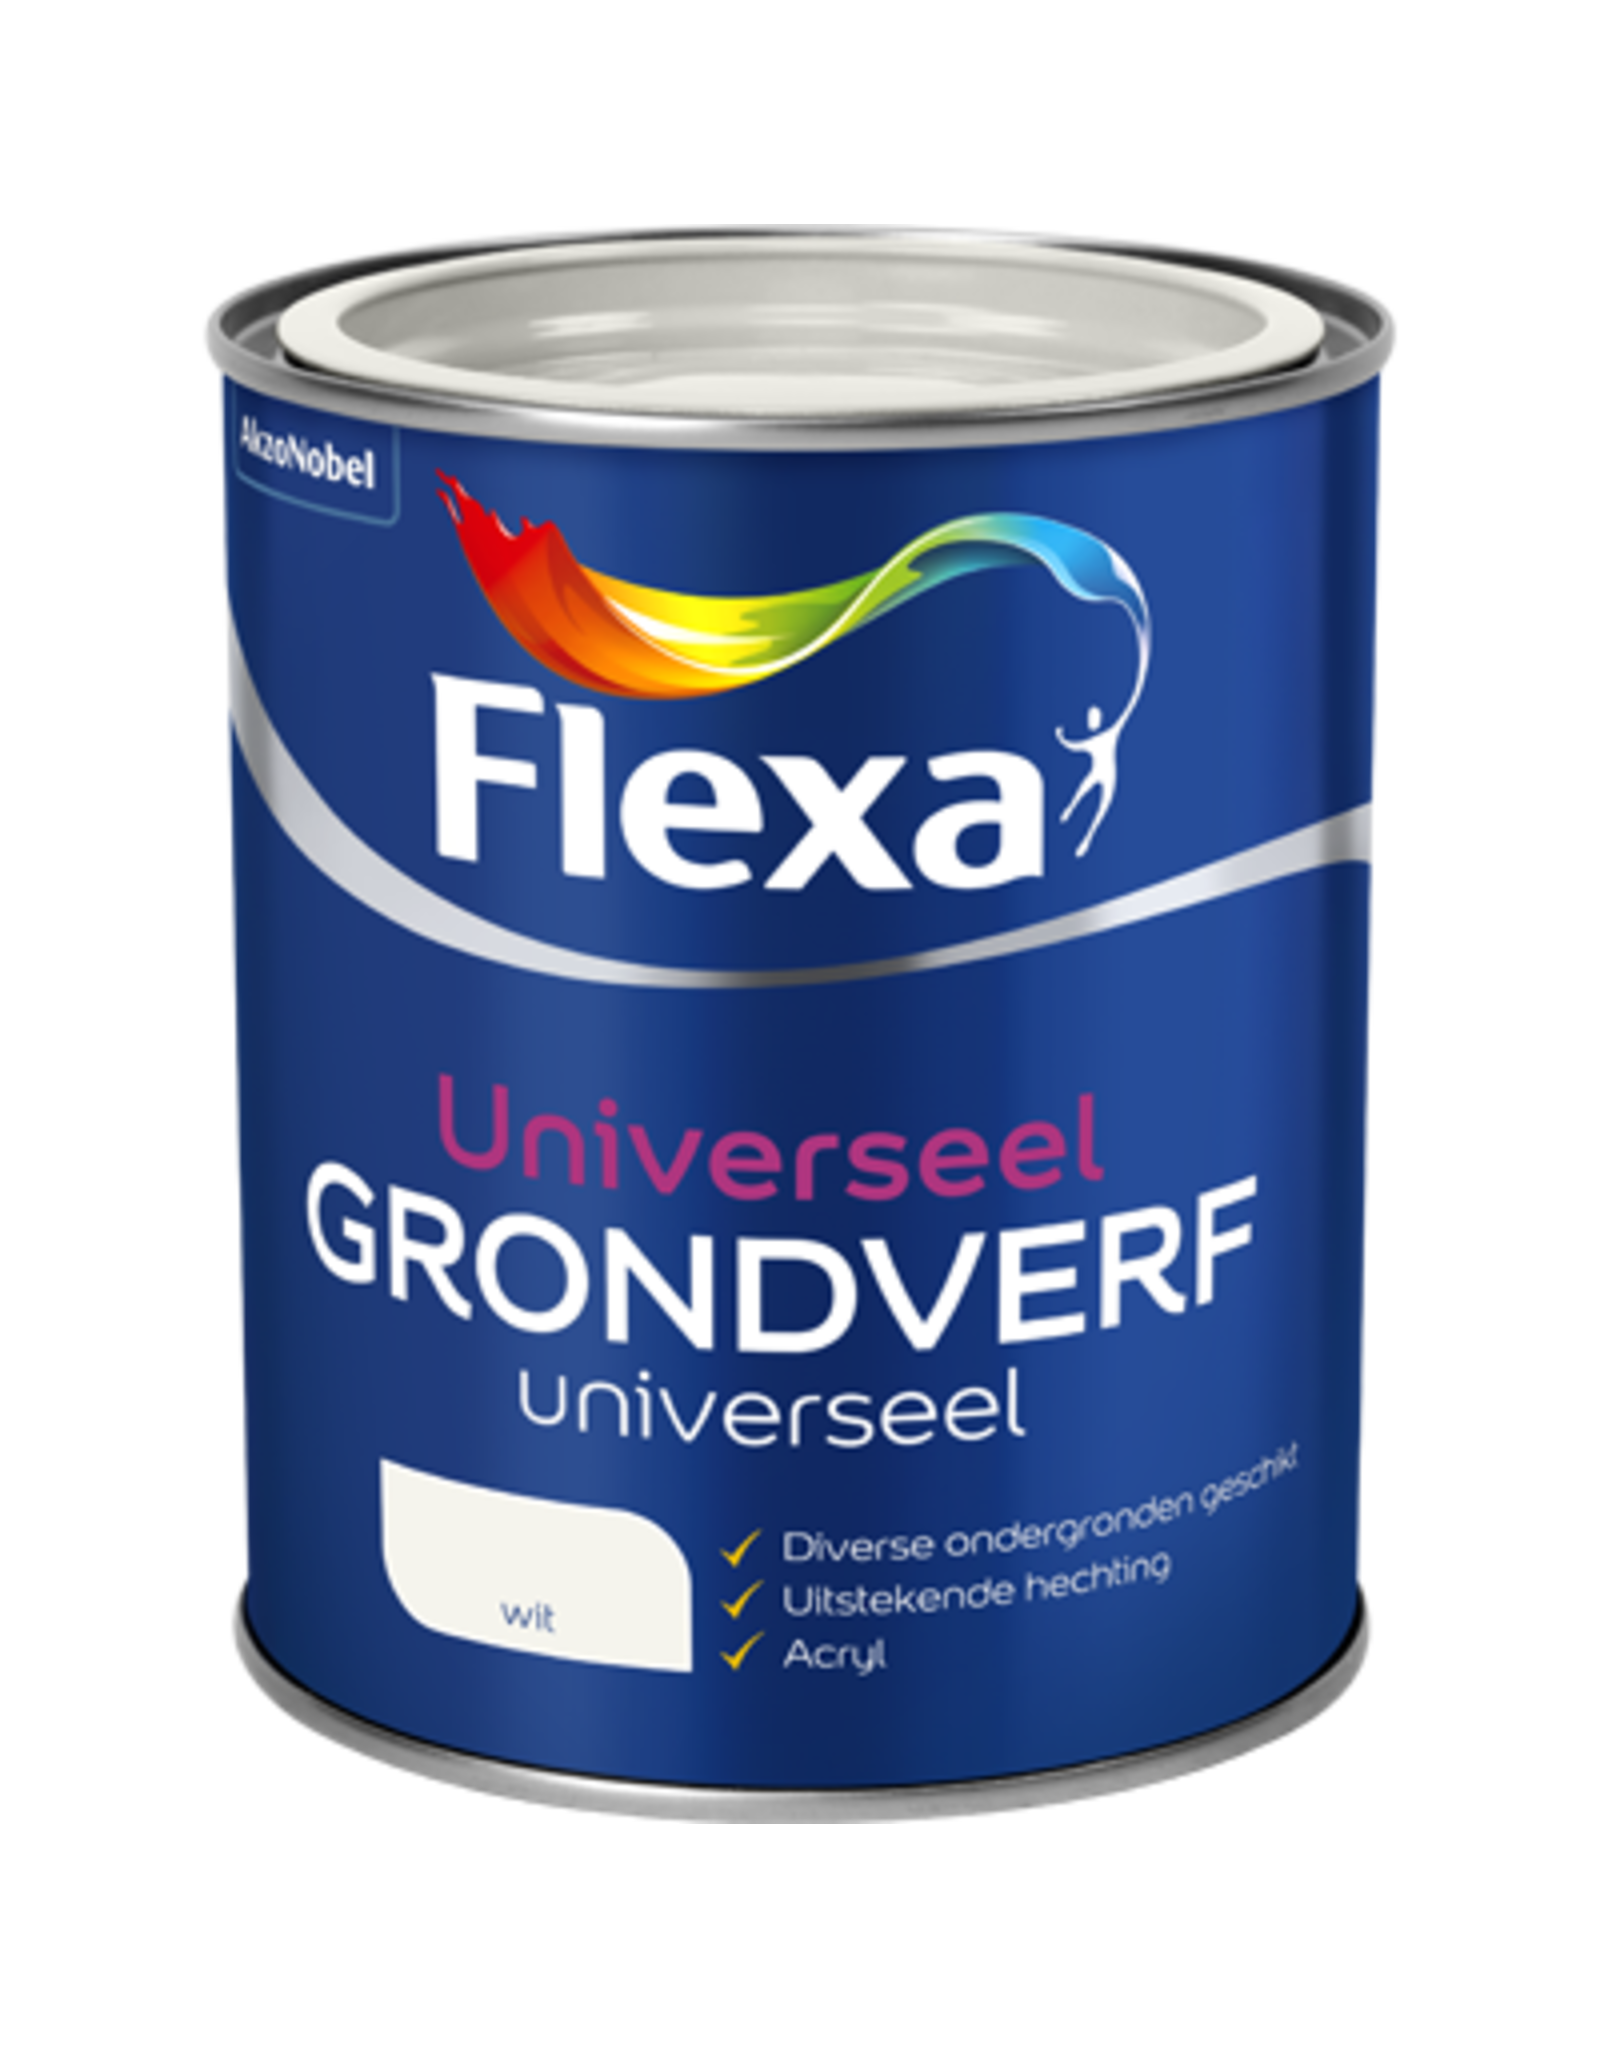 Flexa FL GRONDVERF UNIVERSEEL WIT 750ML